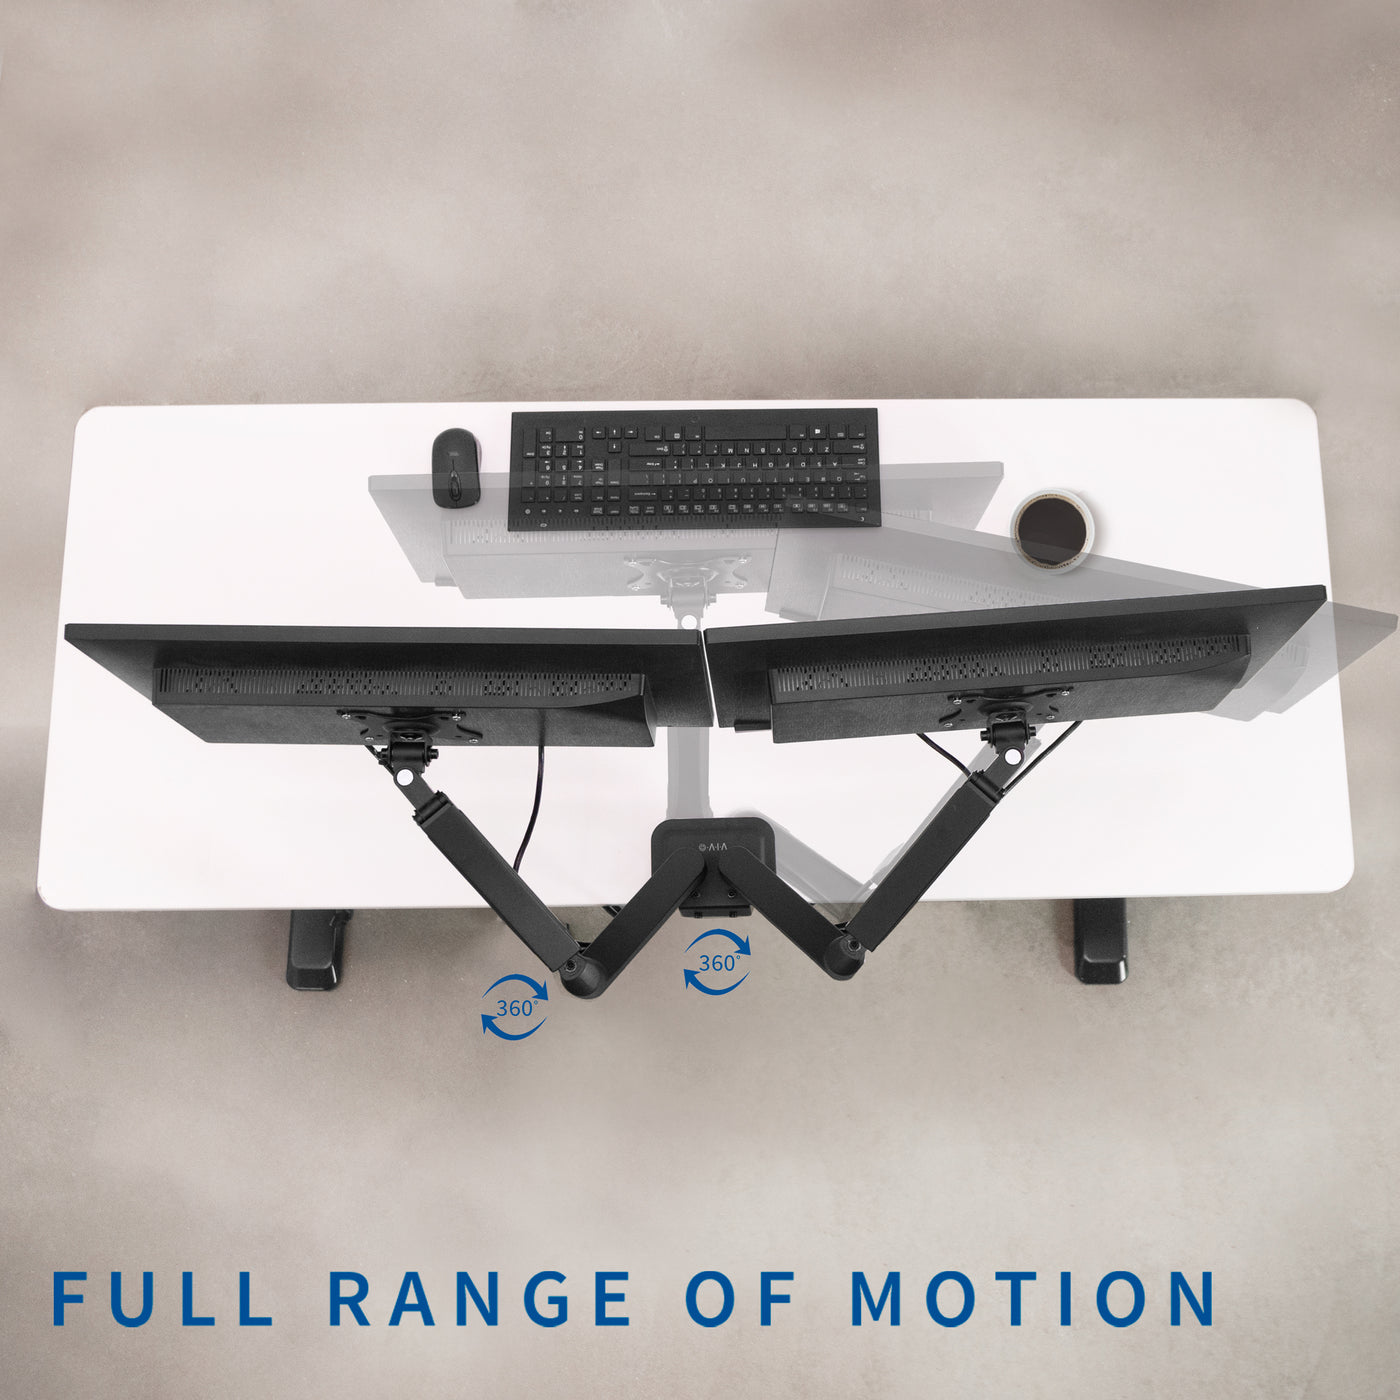 Articulating Pneumatic Arm Dual Monitor Desk Mount 